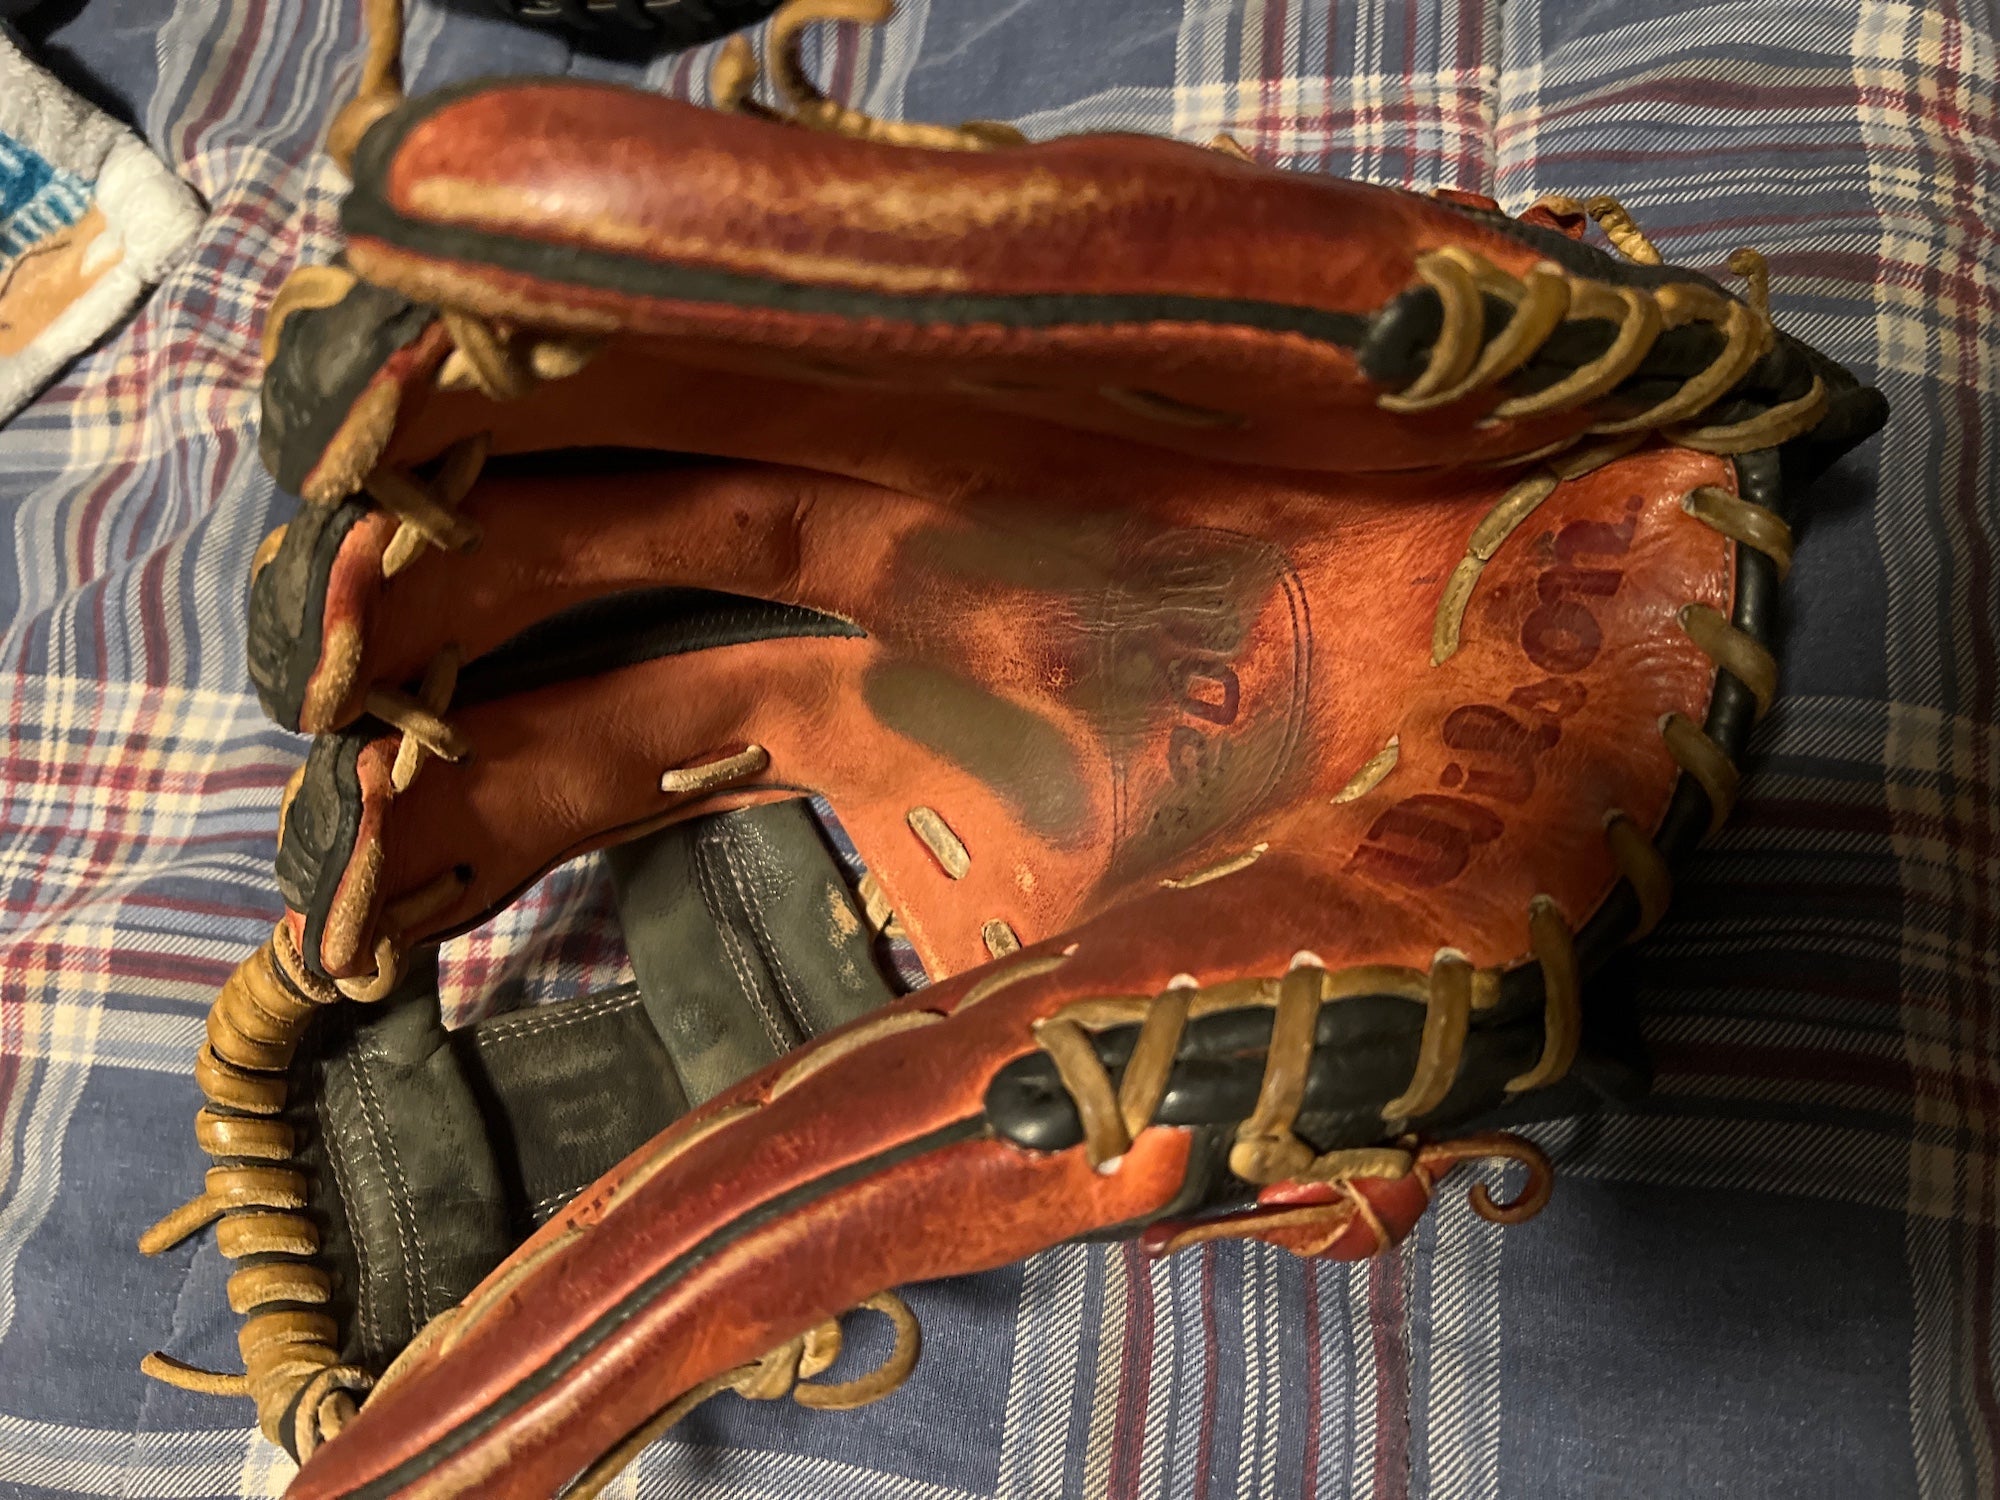 Wilson Infield Baseball Mitt A2000 Robinson Cano Game Glove 11.5 Superskin  RHT - Sports Diamond